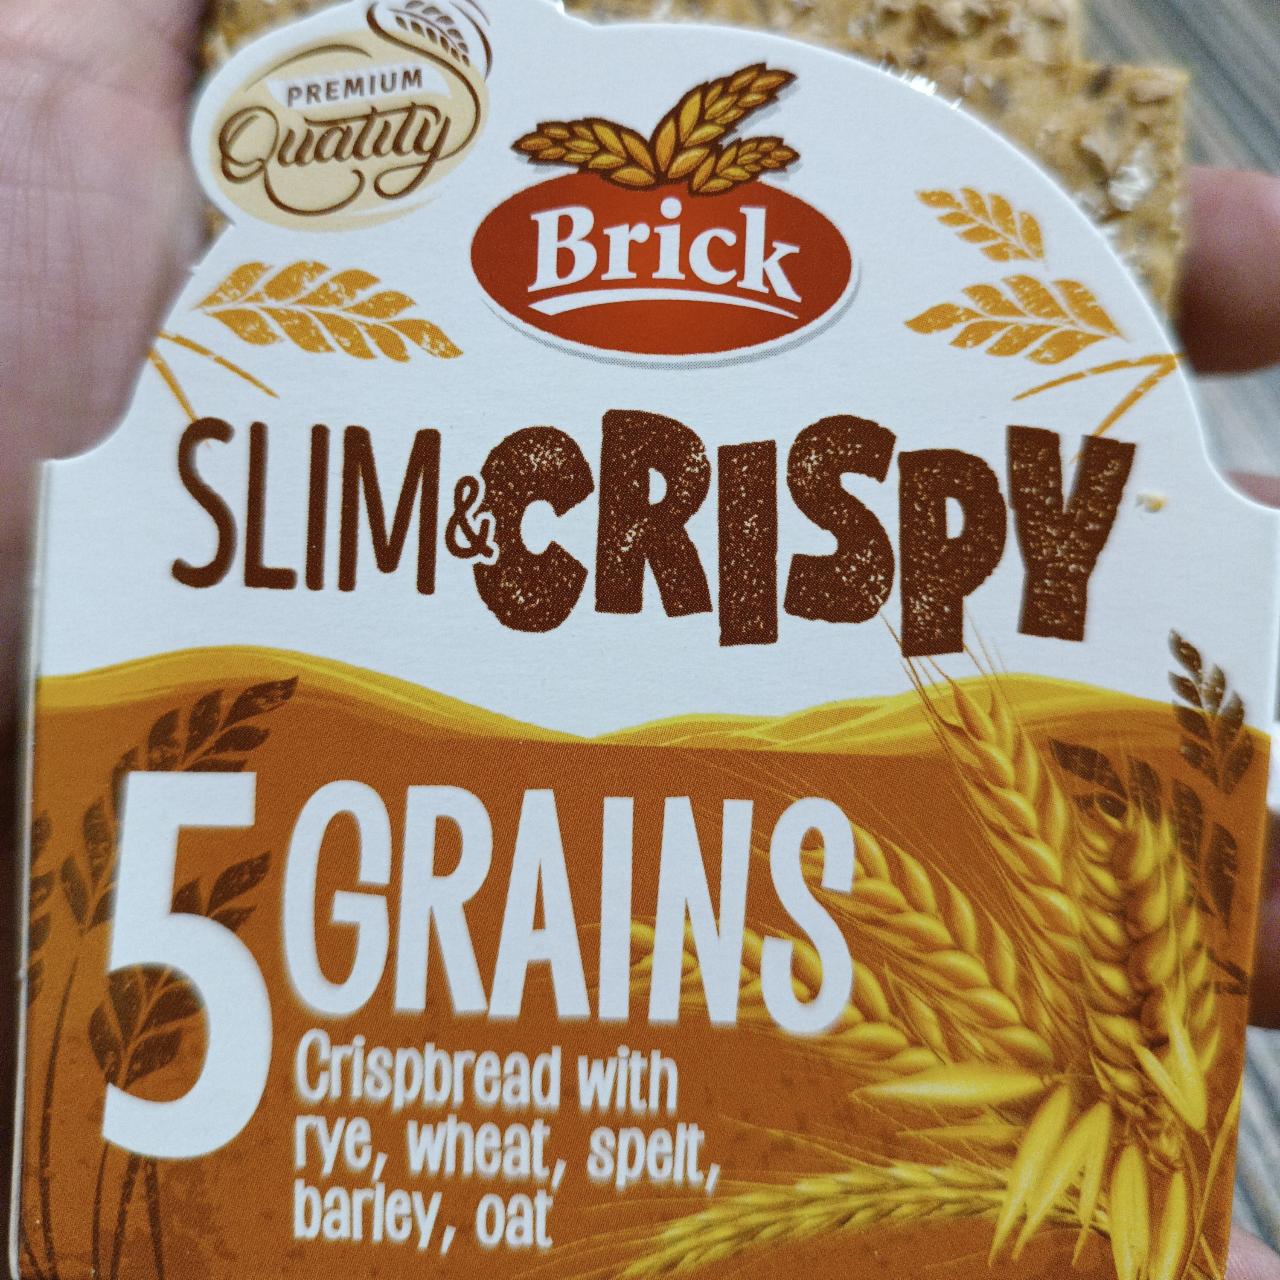 Fotografie - Slim & crispy 5 Grains Brick